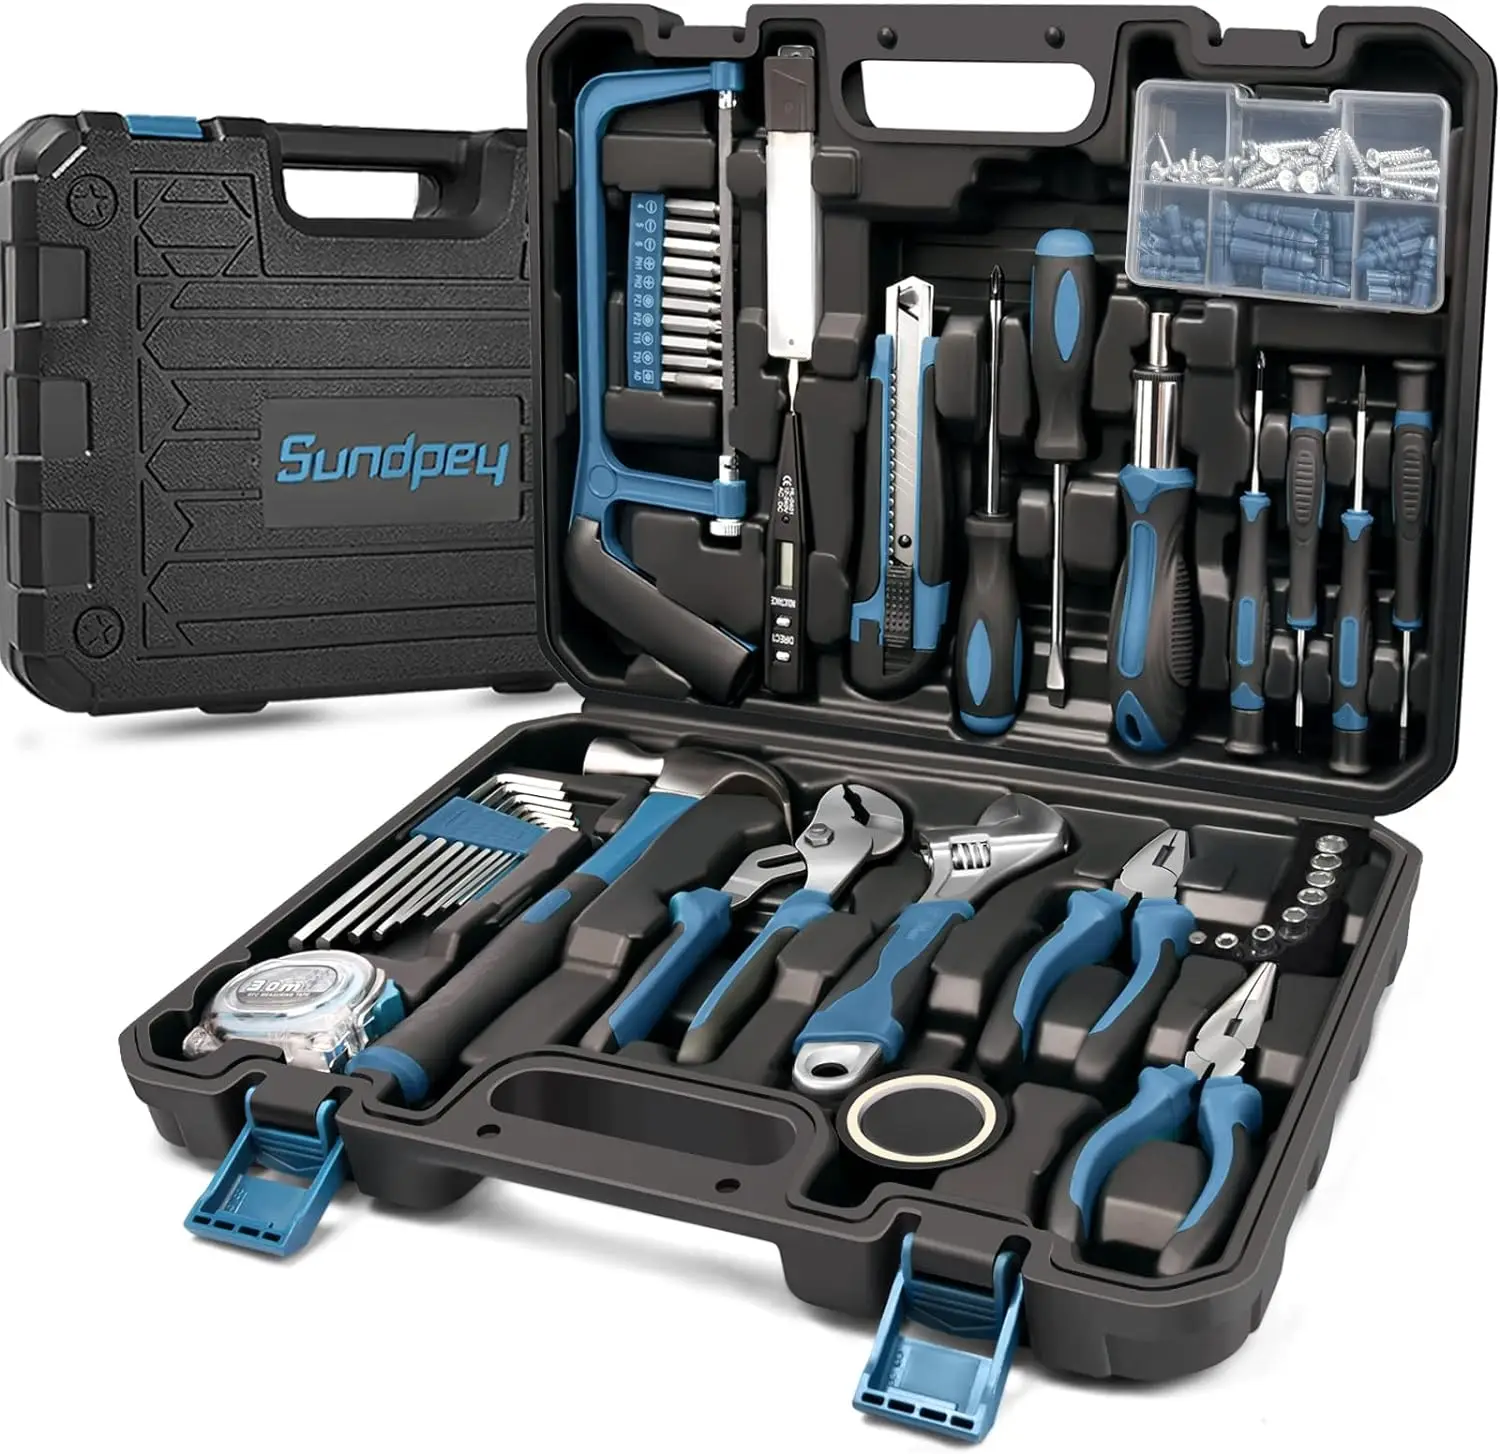 sundpet-home-tool-kit-com-case-e-chave-de-fenda-ratchet-basico-completo-reparo-manual-portatil-domestico-144-pcs